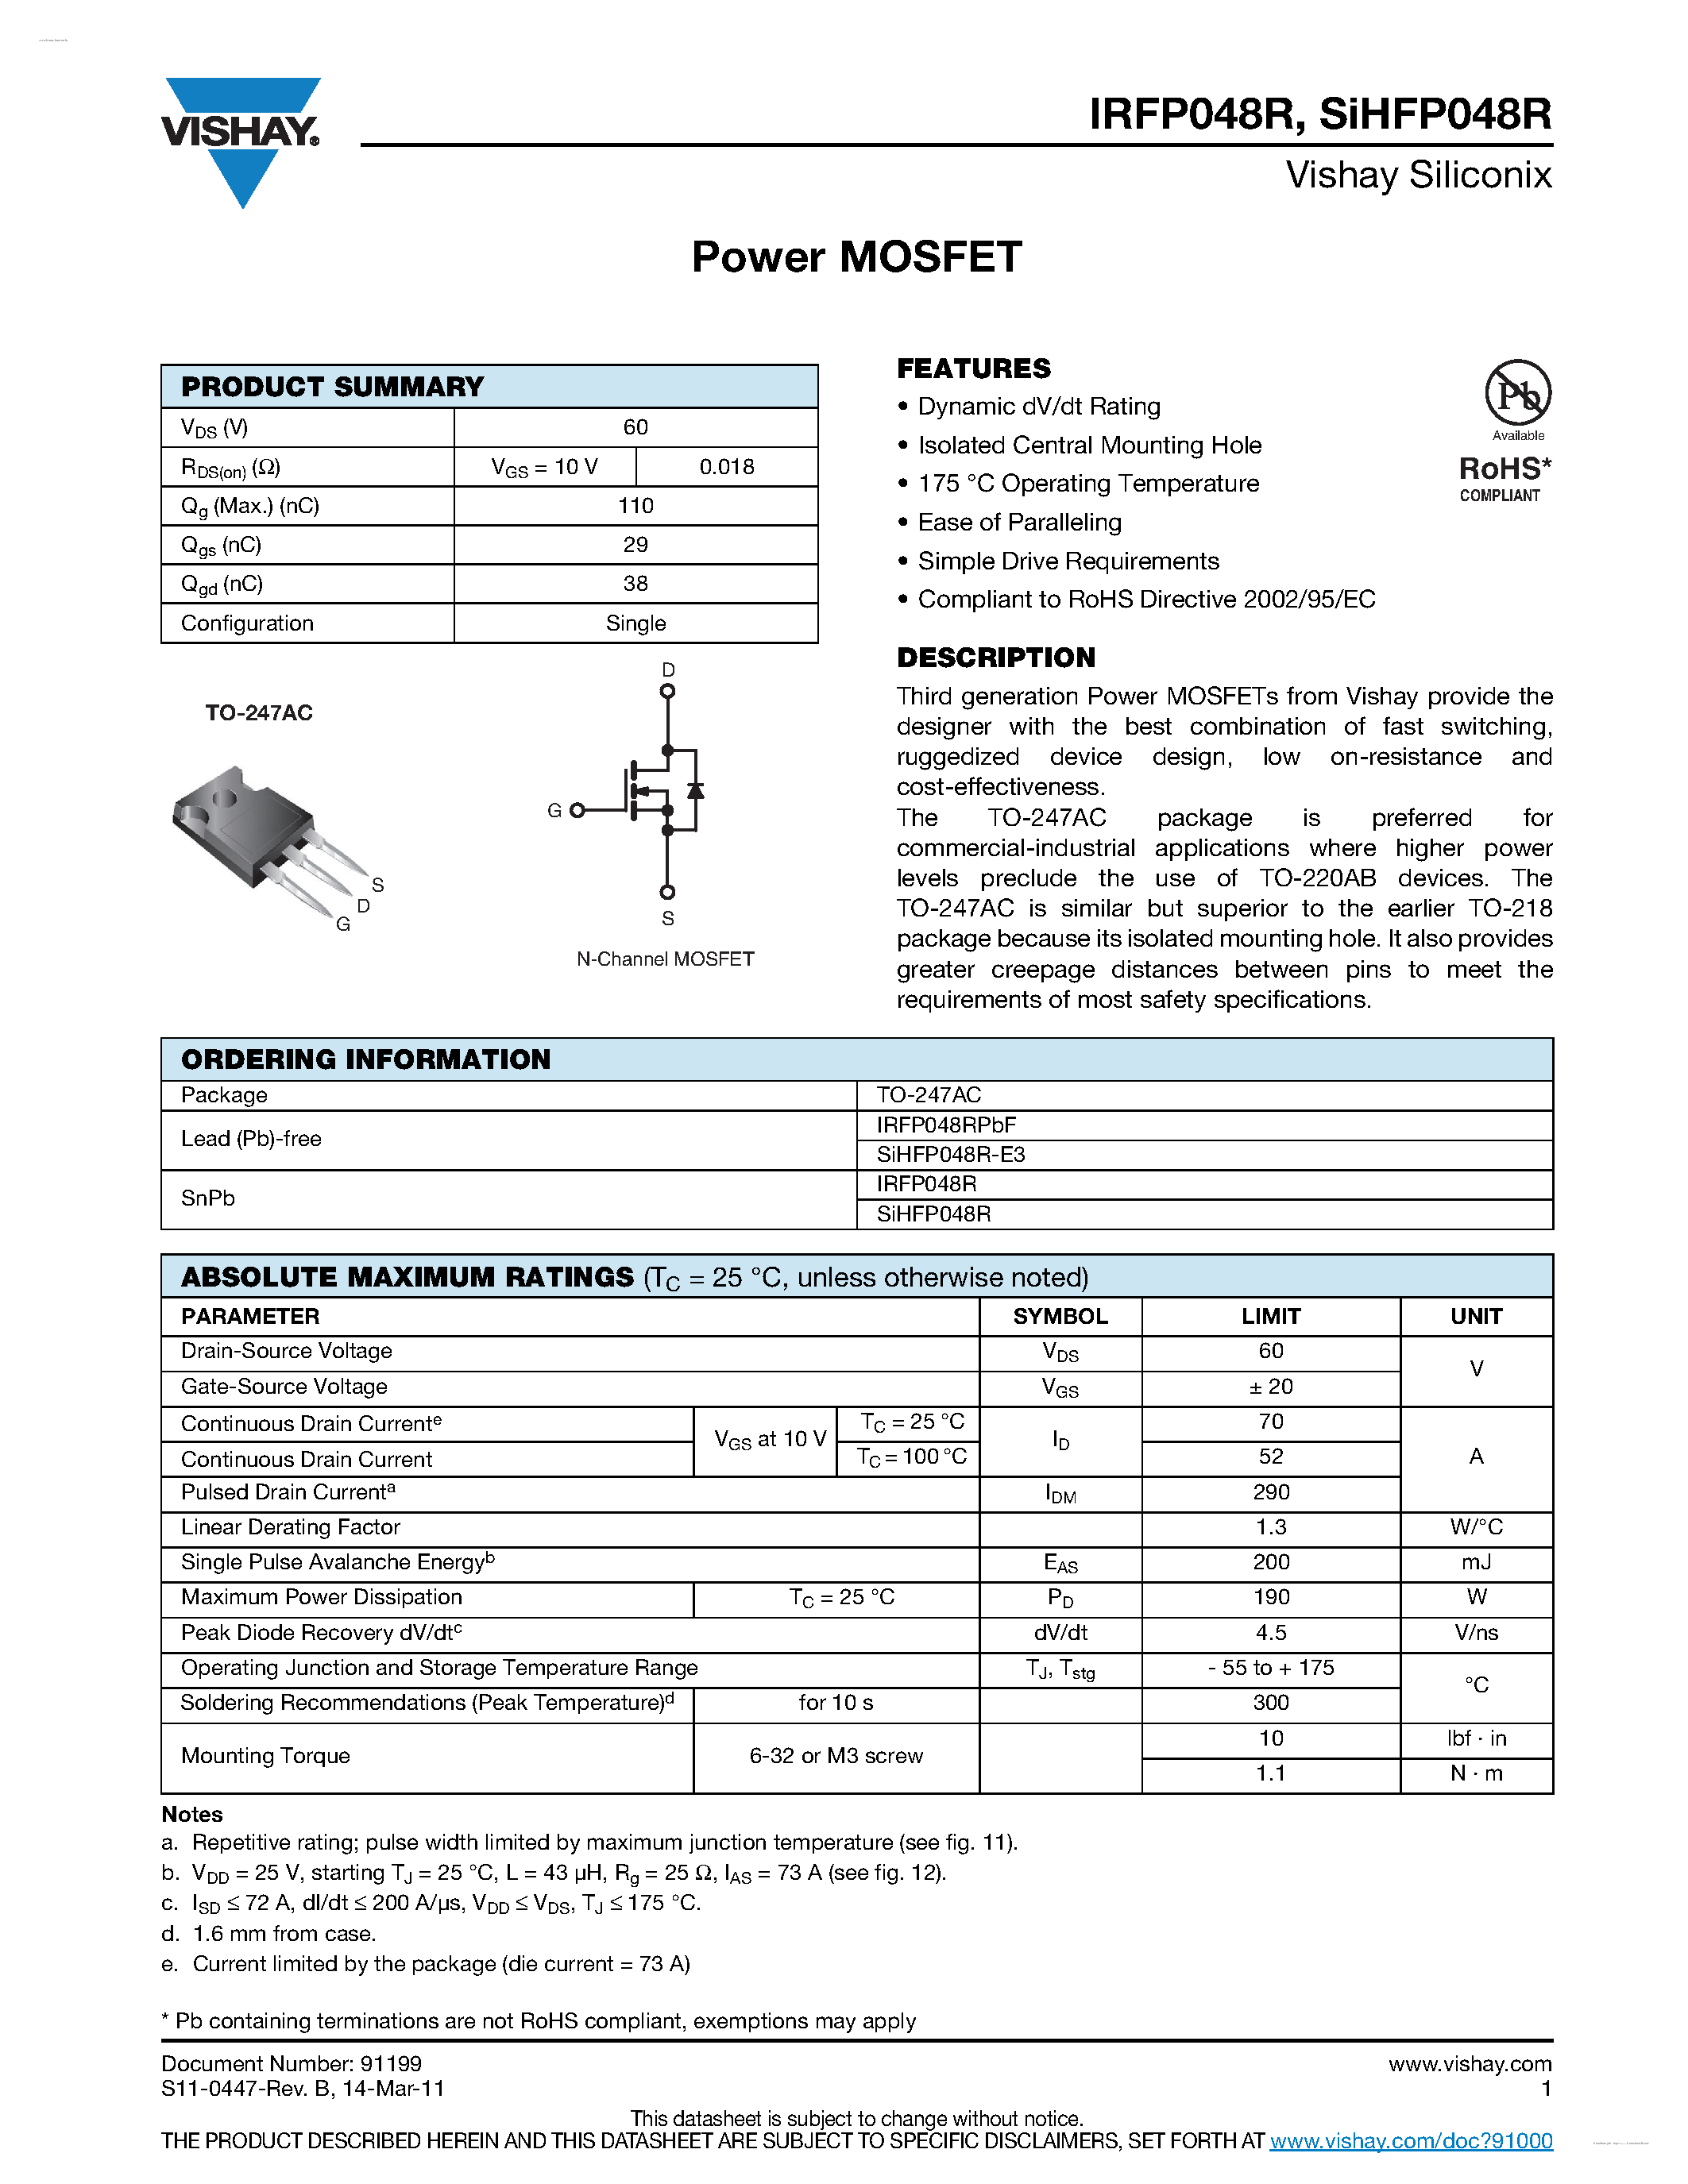 Даташит IRFP048R - Power MOSFET страница 1